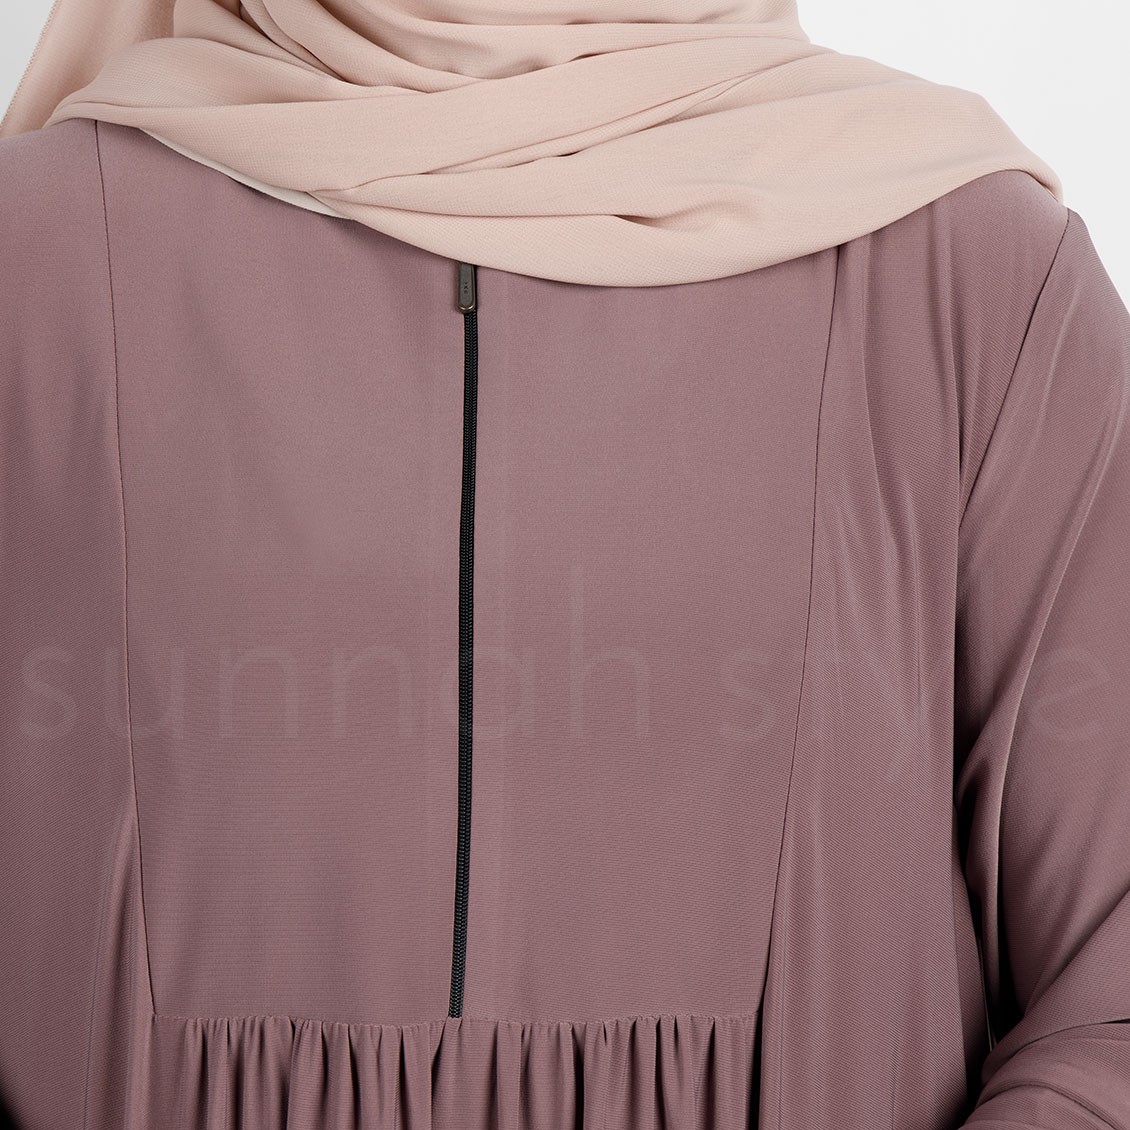 Sunnah Style Flourish Jersey Abaya Twilight Mauve